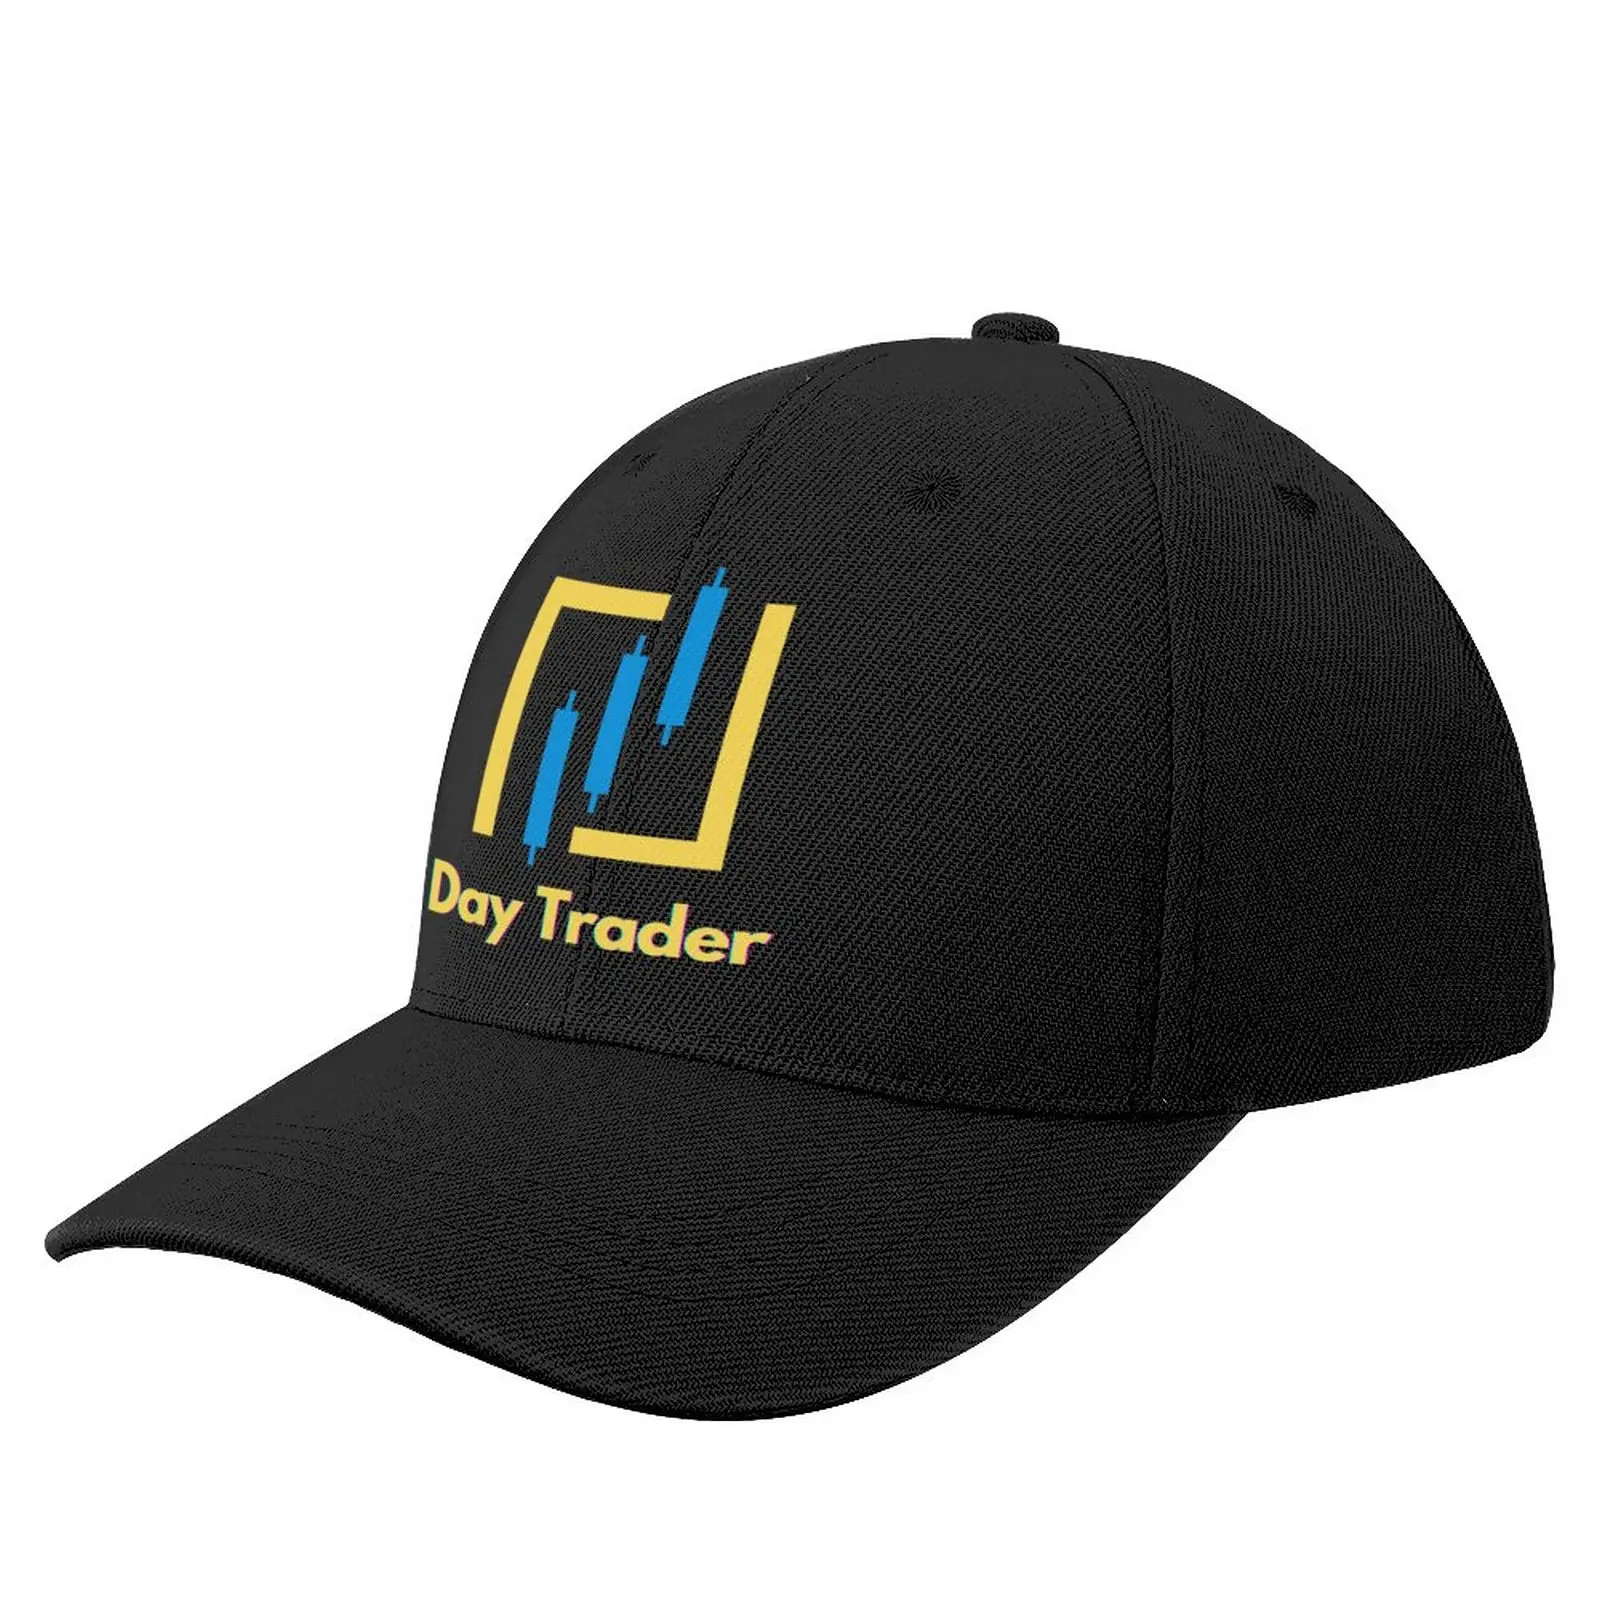 

Forex Day Trader - Trading Tshirts Baseball Cap Snap Back Hat Icon Brand Man Caps Golf Wear Trucker Hats For Men Women'S